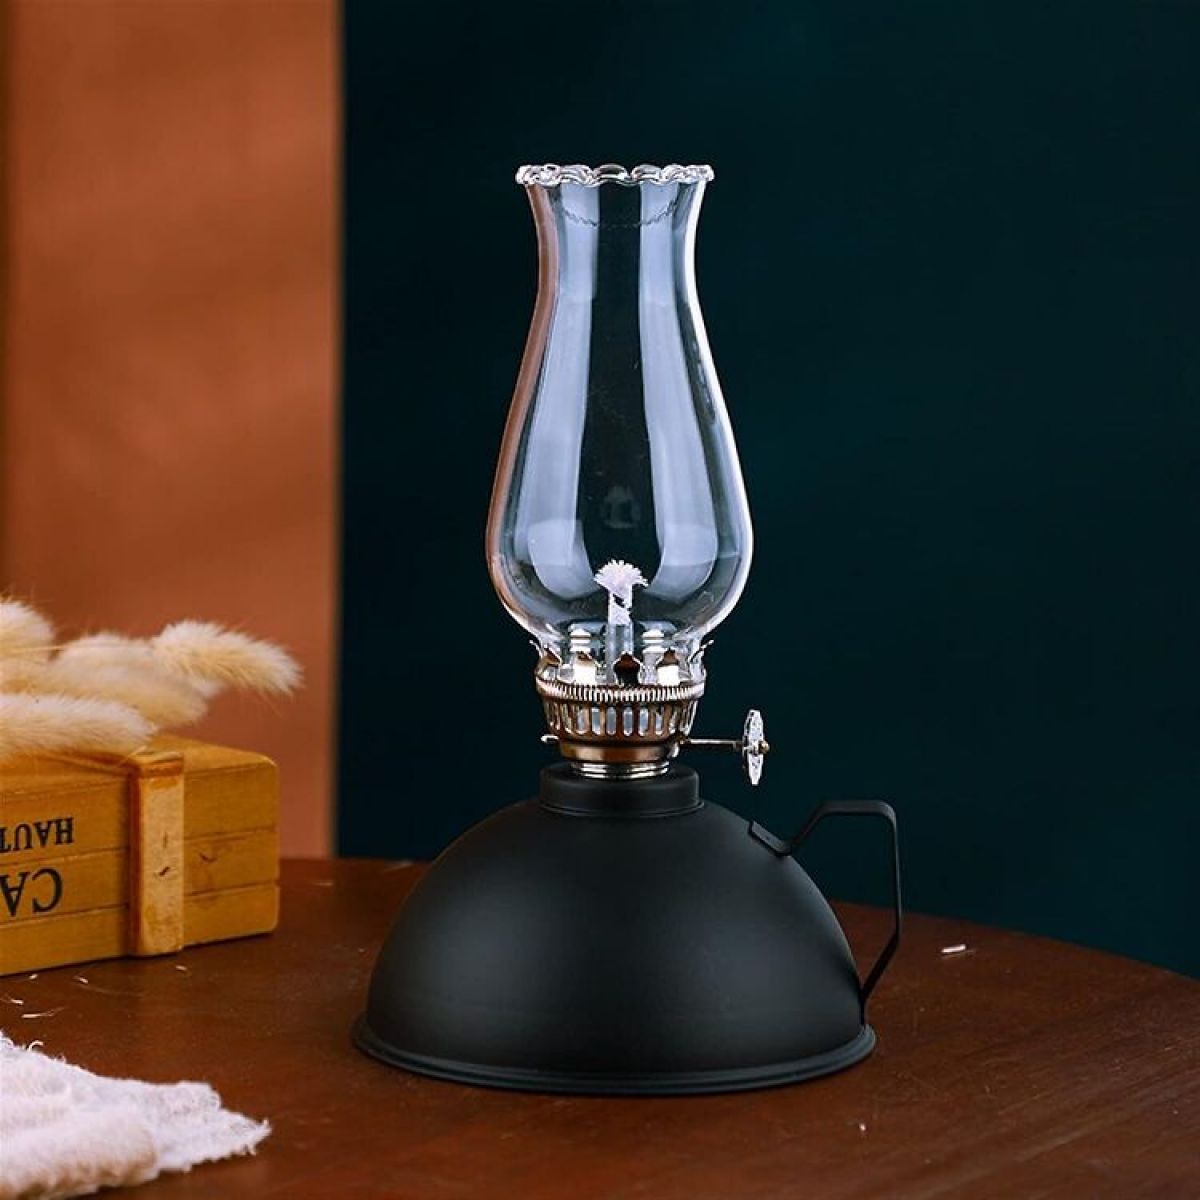 Amanigo Matte õlitatud lamp retrolamp, antiikküünal, must